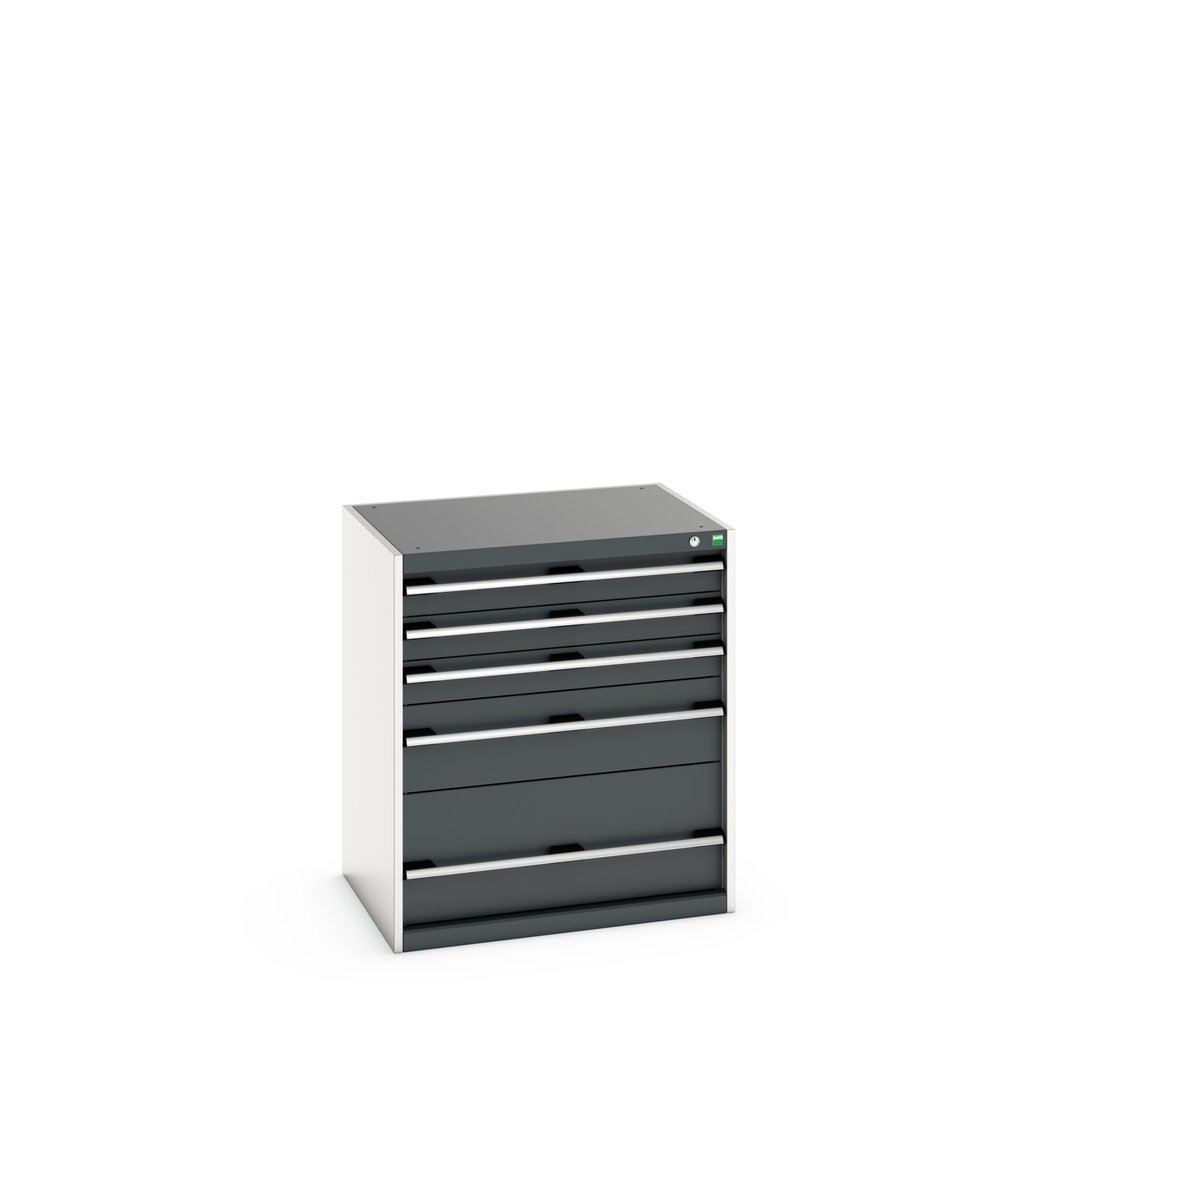 40020035. - cubio drawer cabinet